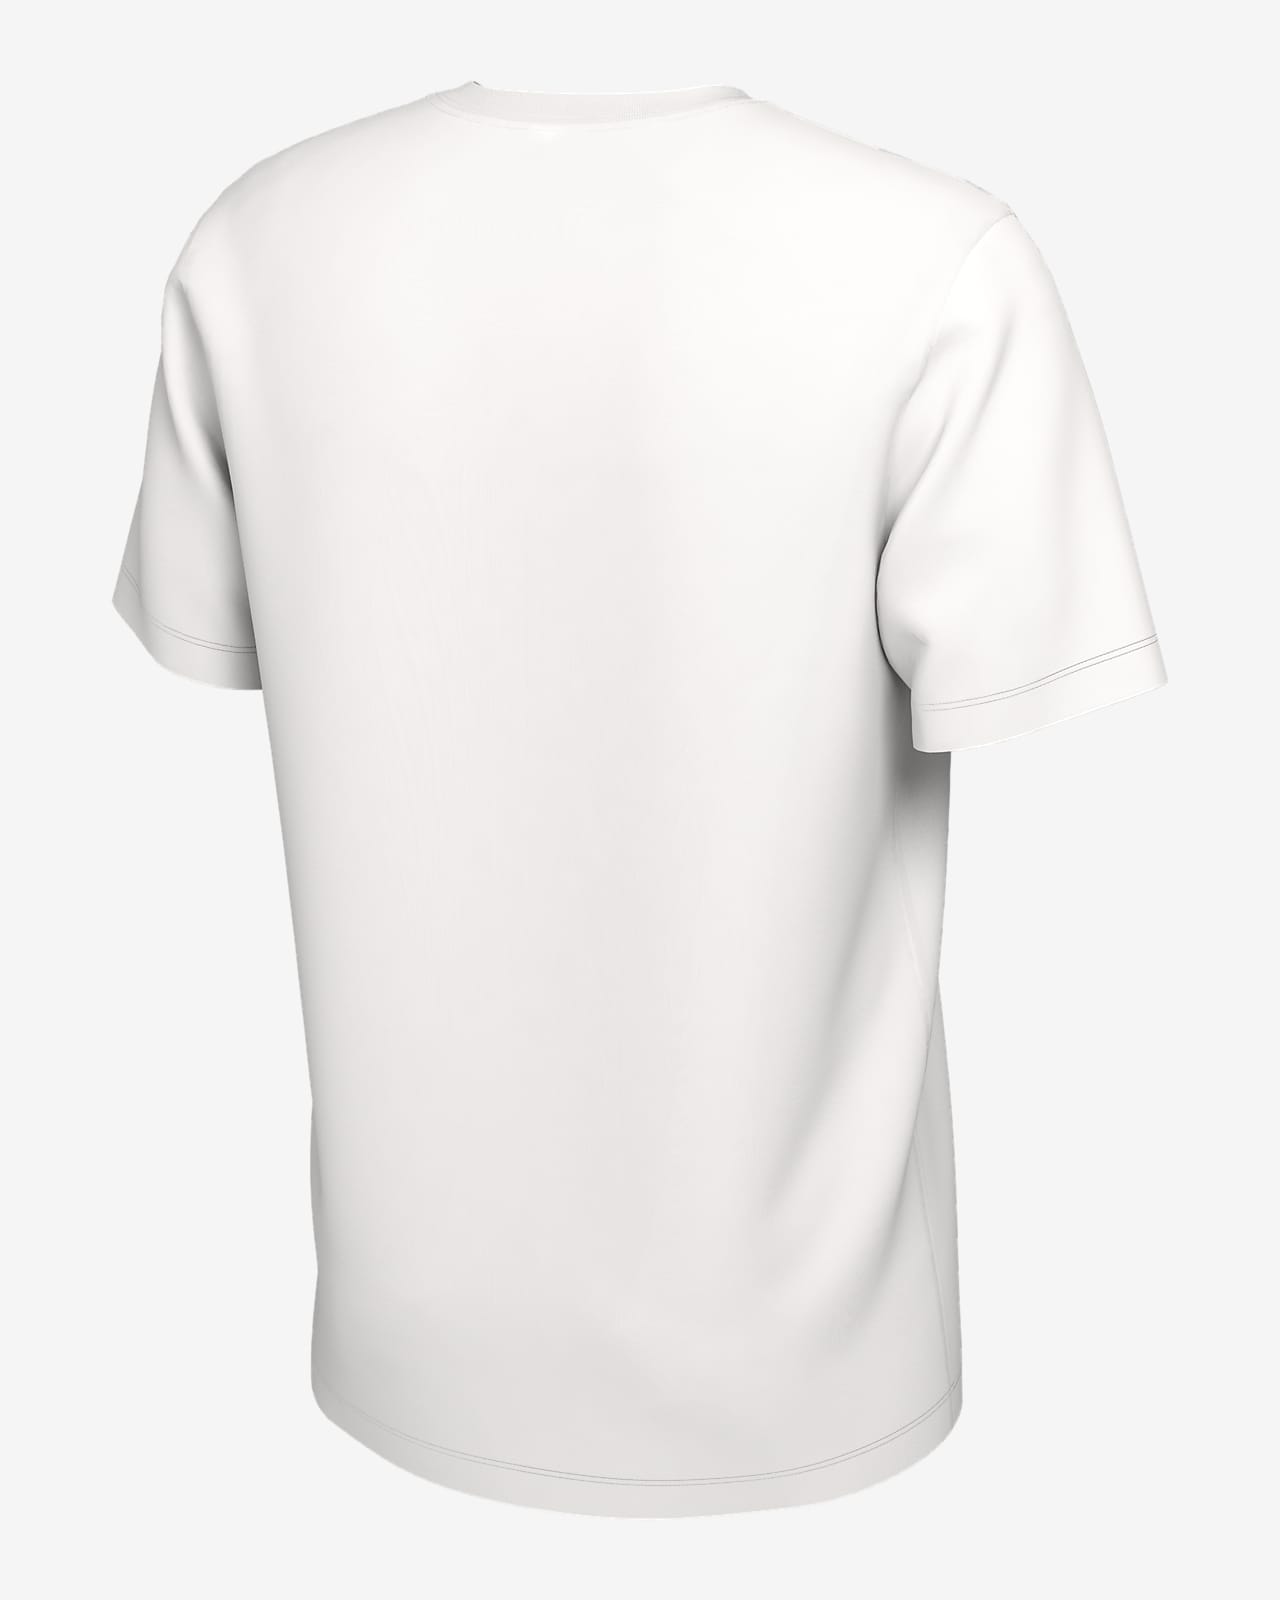 Nike Women's WNBA White Short Sleeve T-Shirt, Large